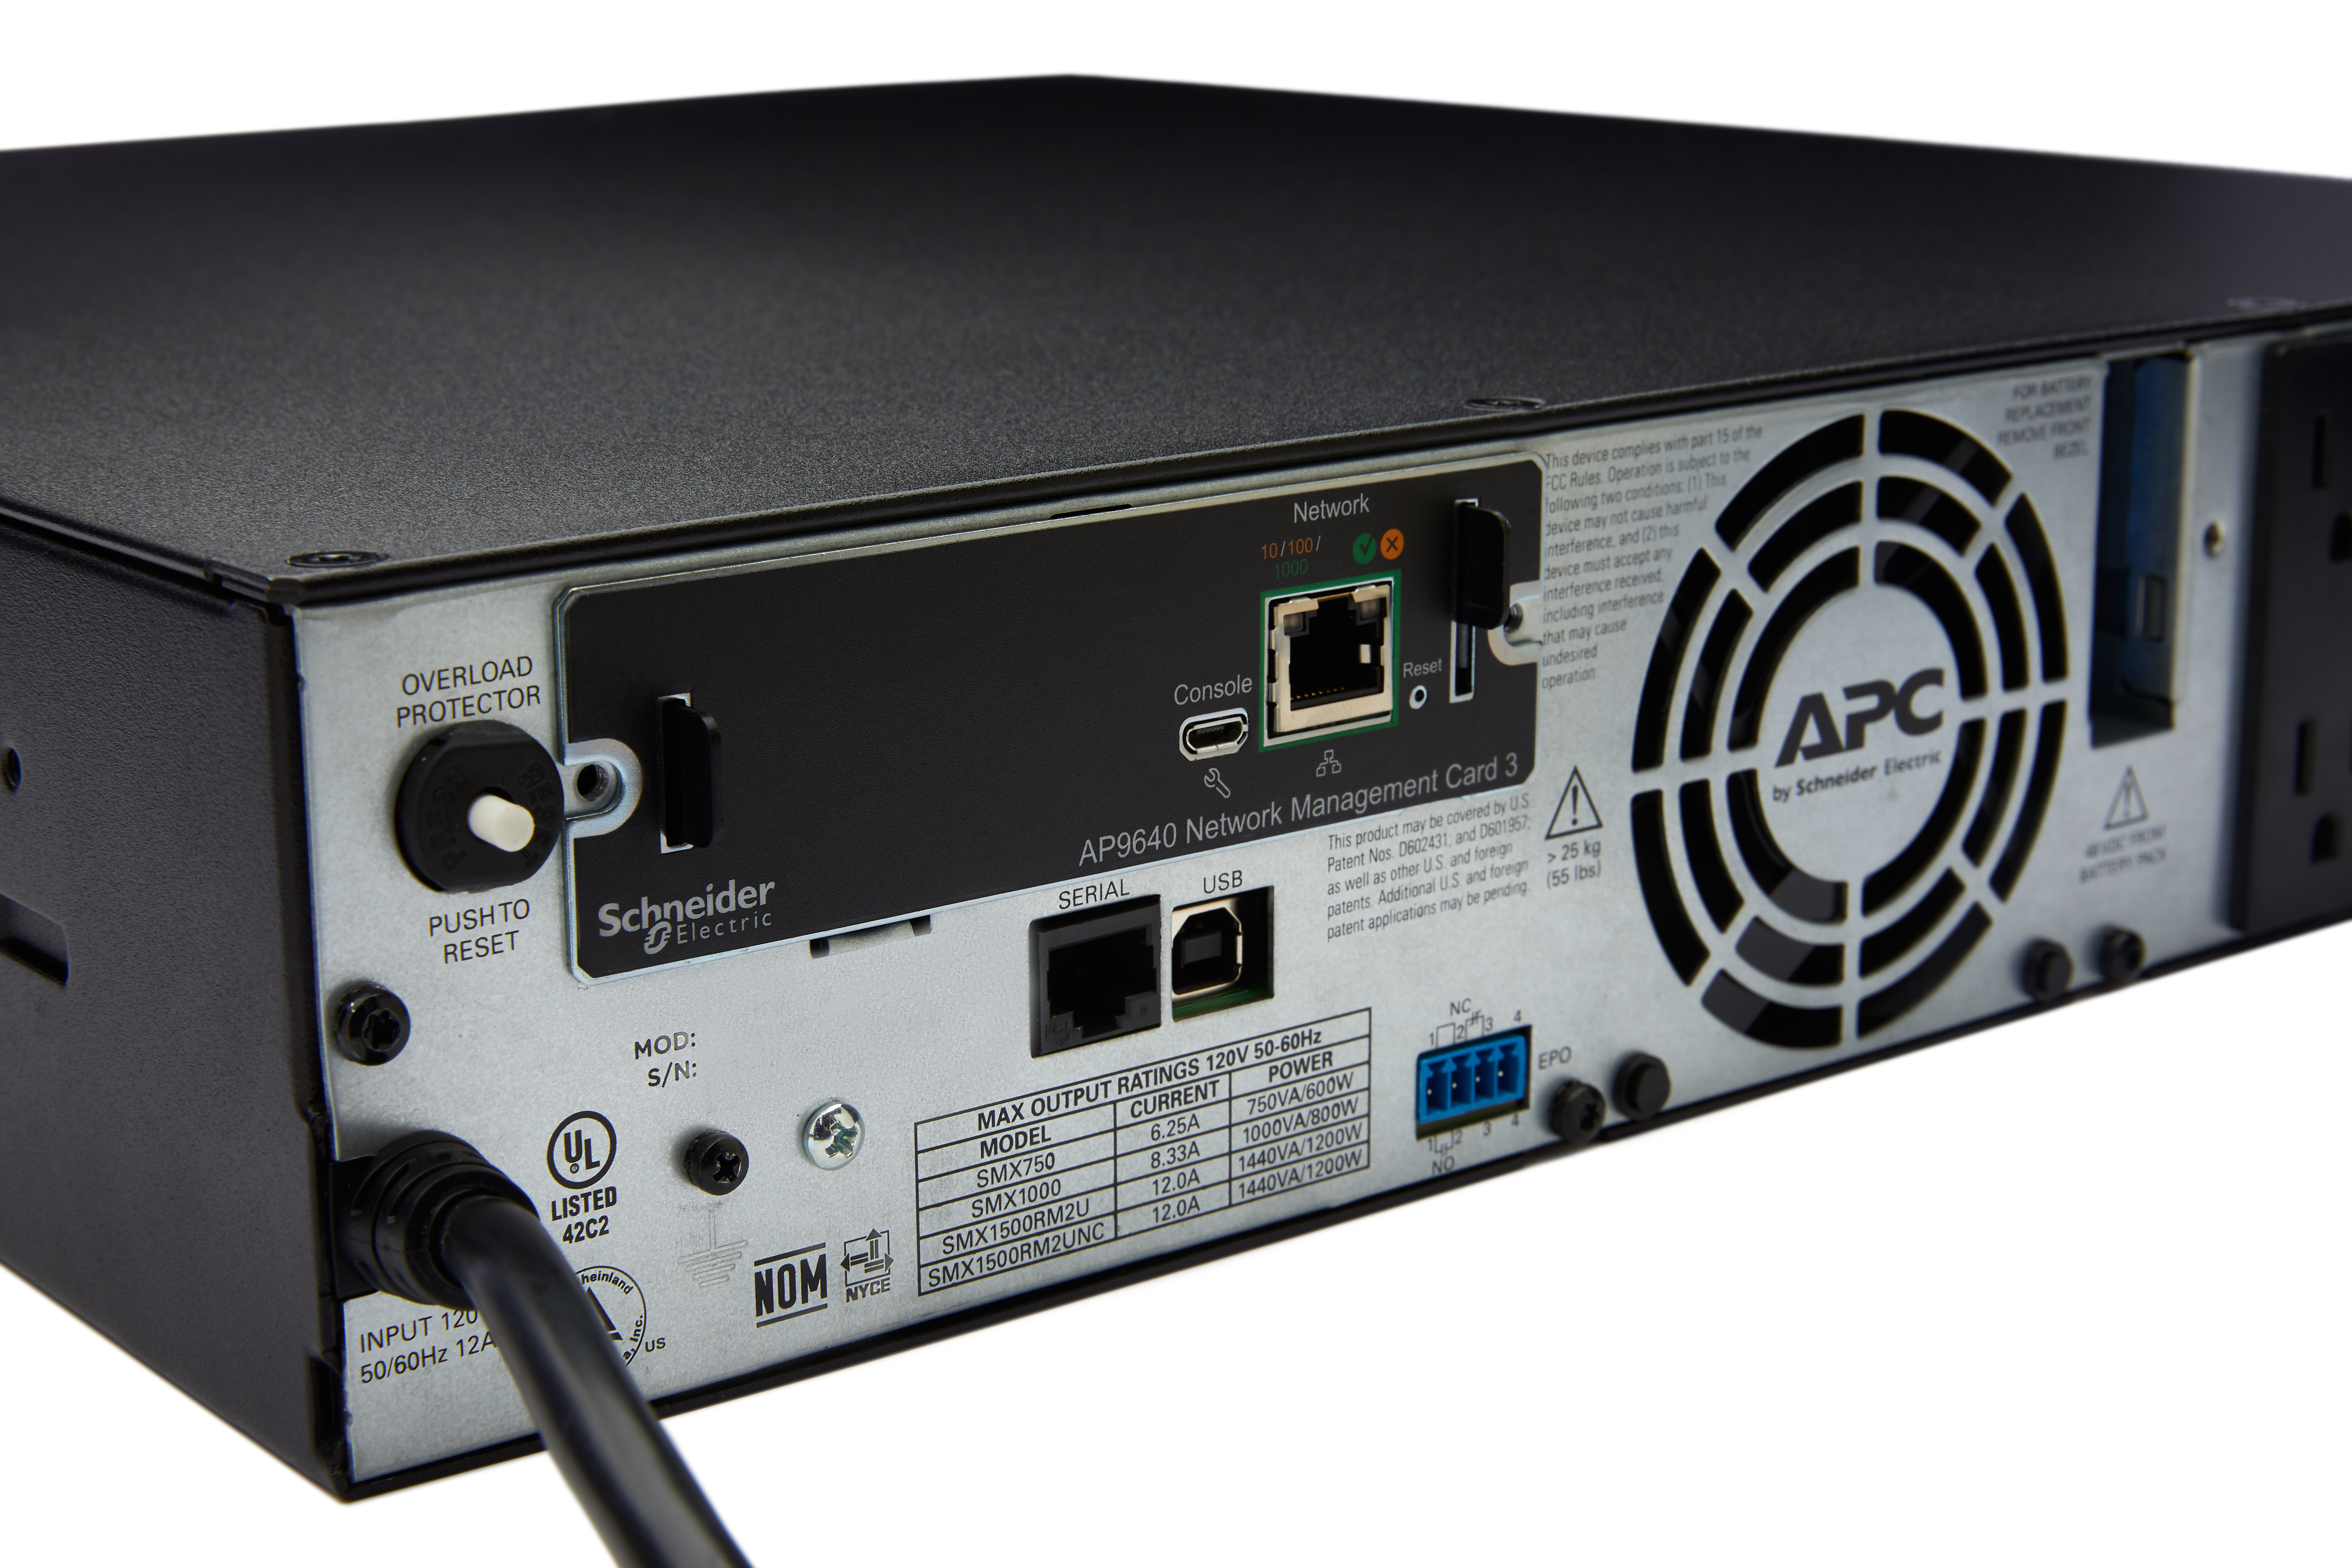 APC Network Management Card 3 with PowerChute Network Shutdown